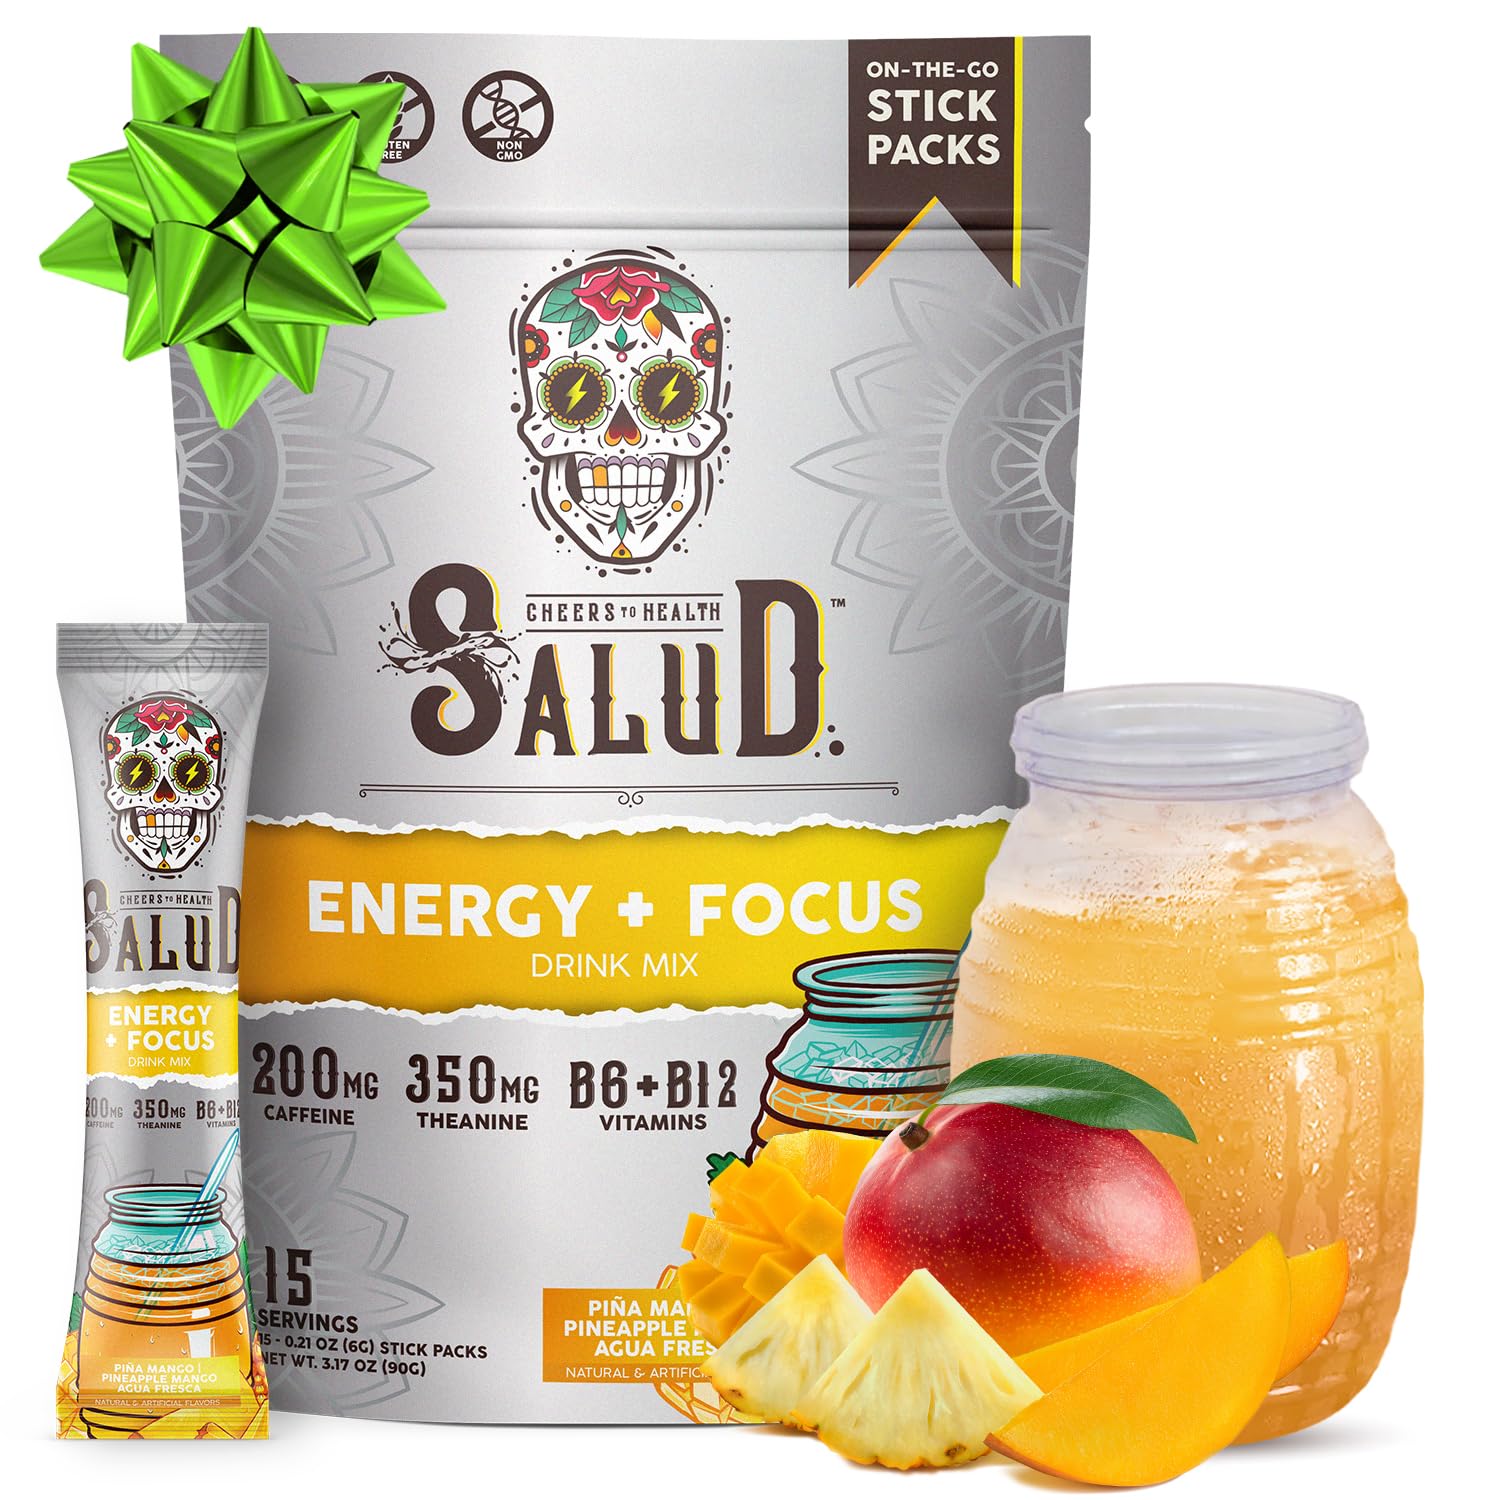 Salud 2-Pack |2-in-1 Energy + Focus (Pineapple Mango) & Hydration + Immunity (Lemonade) – 15 Servings Each, Agua Fresca Drink Mix, Non-GMO, Gluten Free, Vegan, Low Calorie, 1g of Sugar